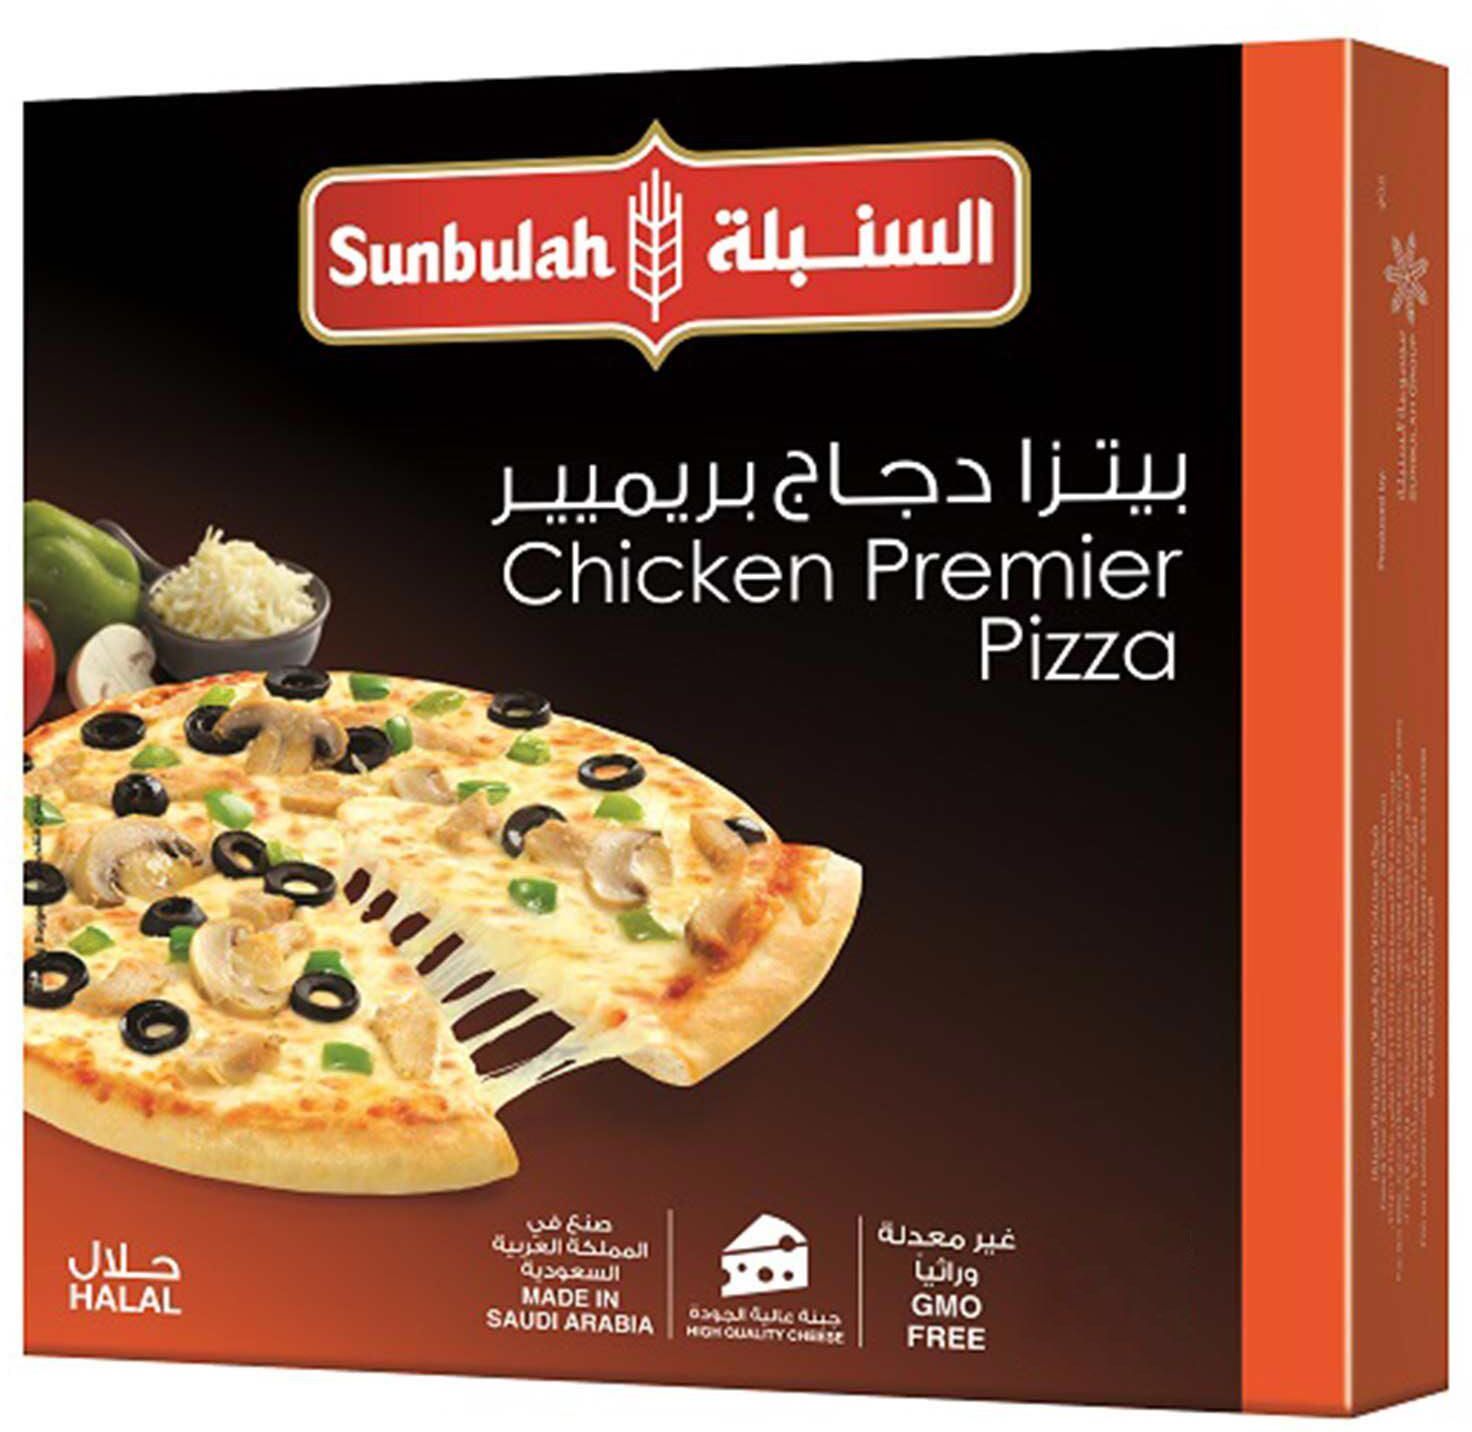 Sunbulah chicken pizza 470 g